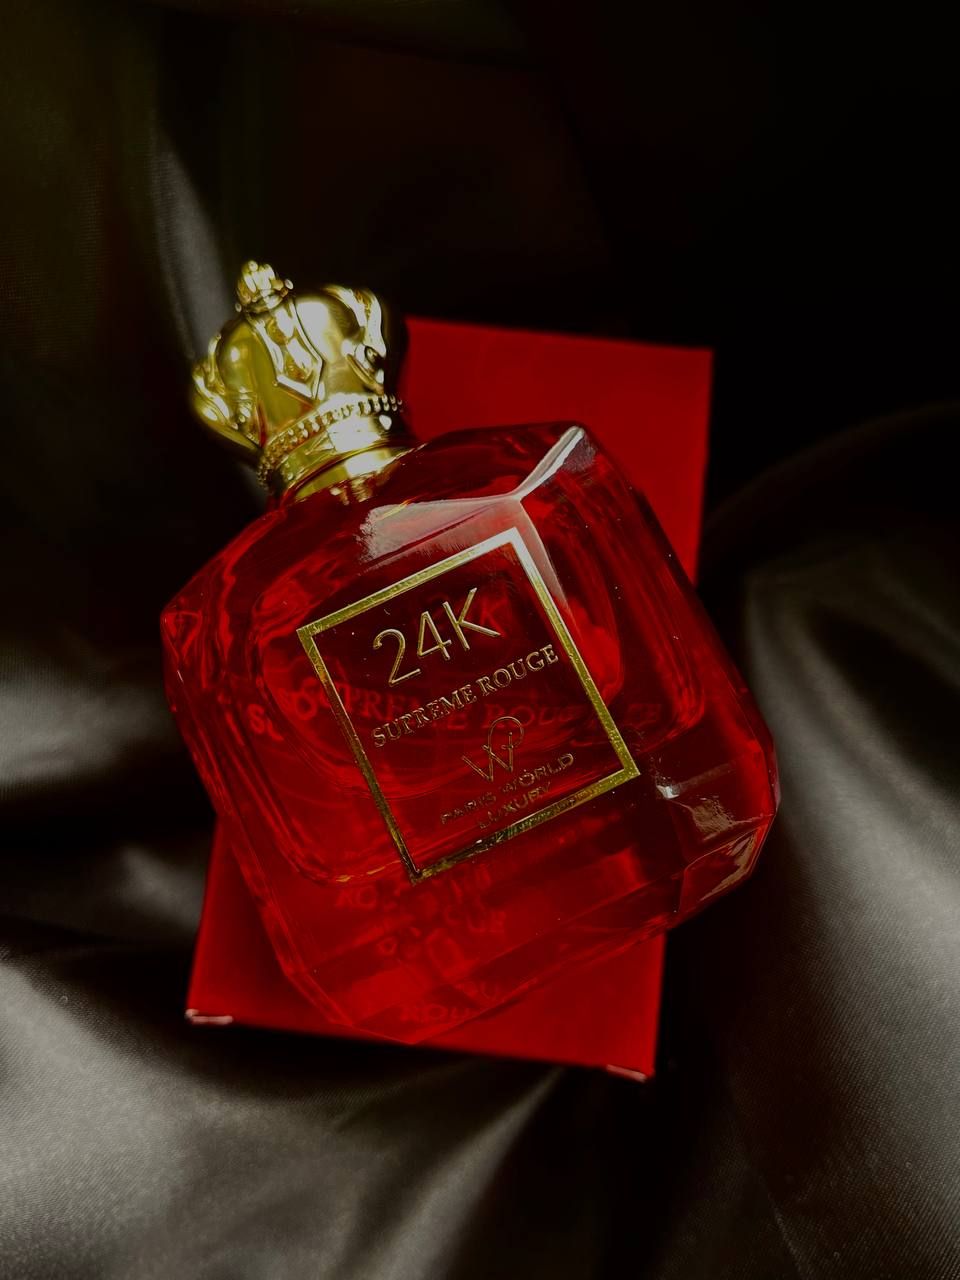 Luxury 24k supreme rouge. 24k Supreme rouge Парфюм. Духи Supreme rouge 24k. Paris World Luxury 24k Supreme rouge. Paris World Luxury 24k Supreme rouge 100.